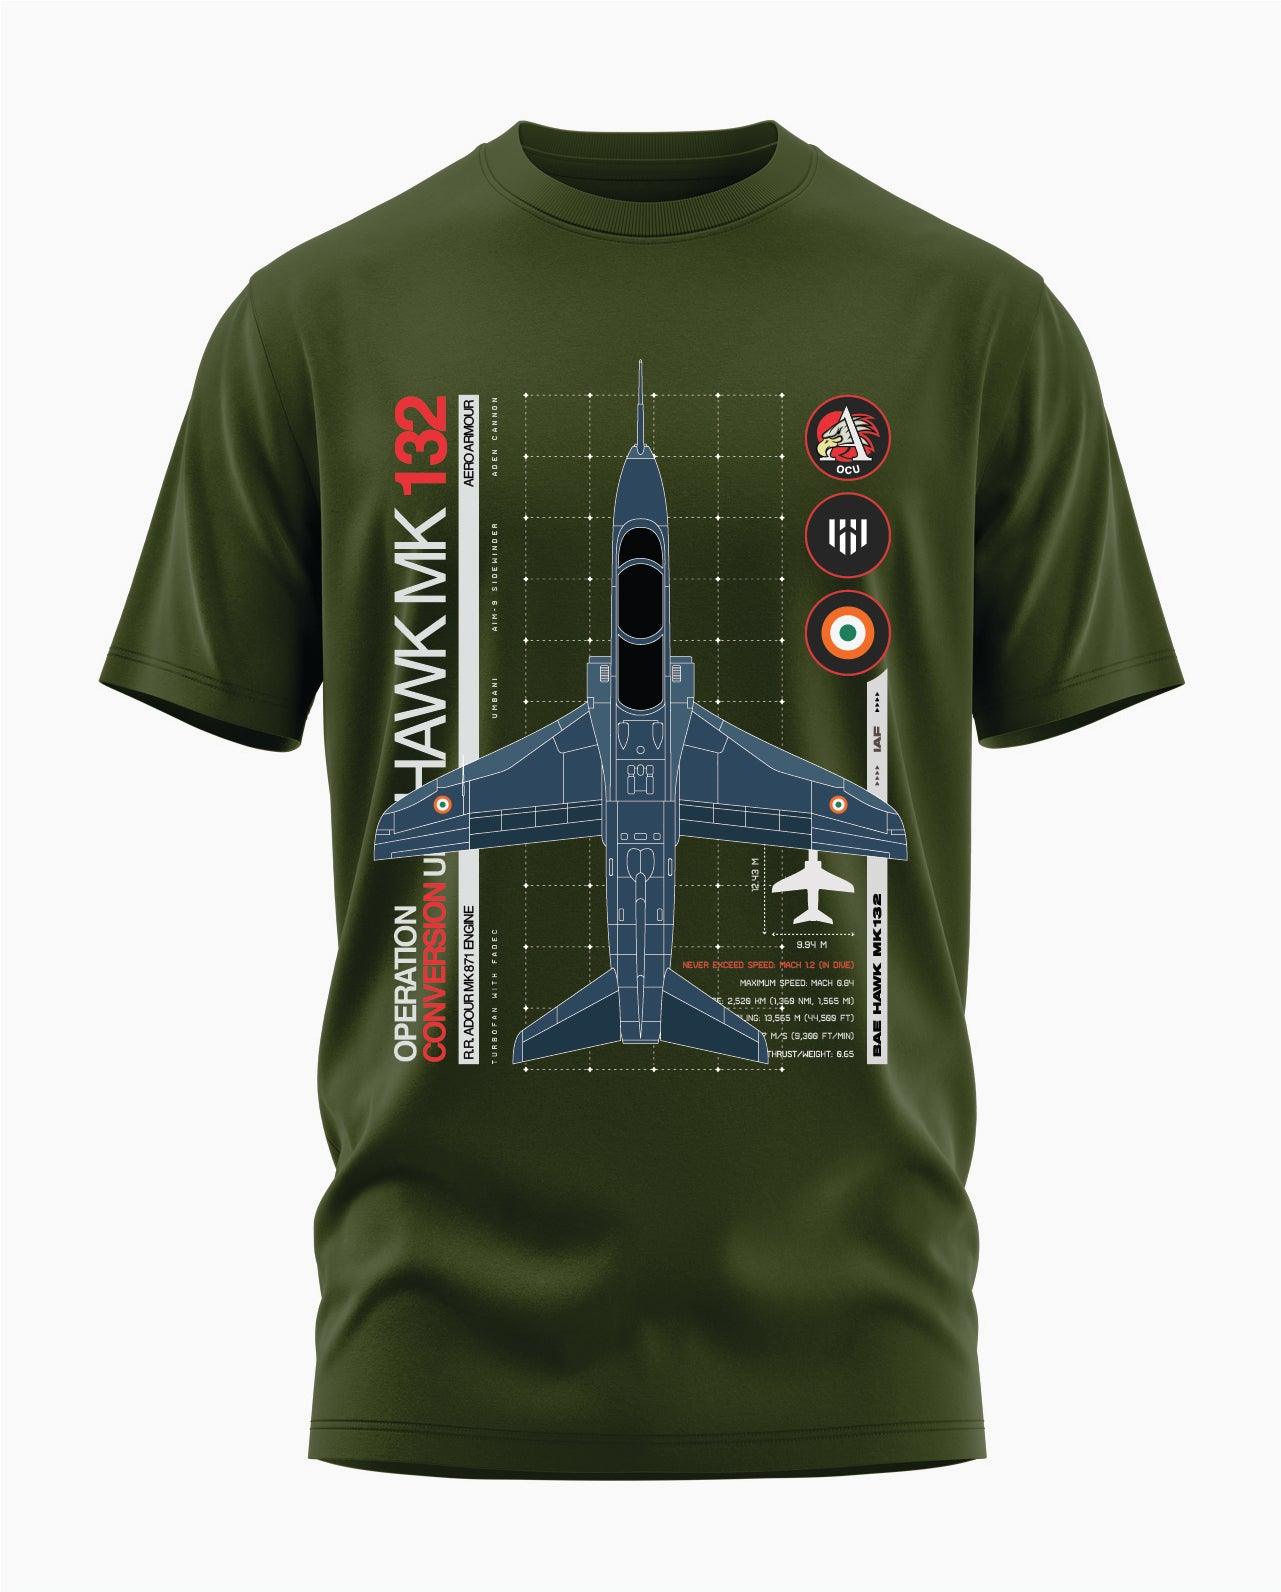 OCU HAWK MK132 T-Shirt - Aero Armour